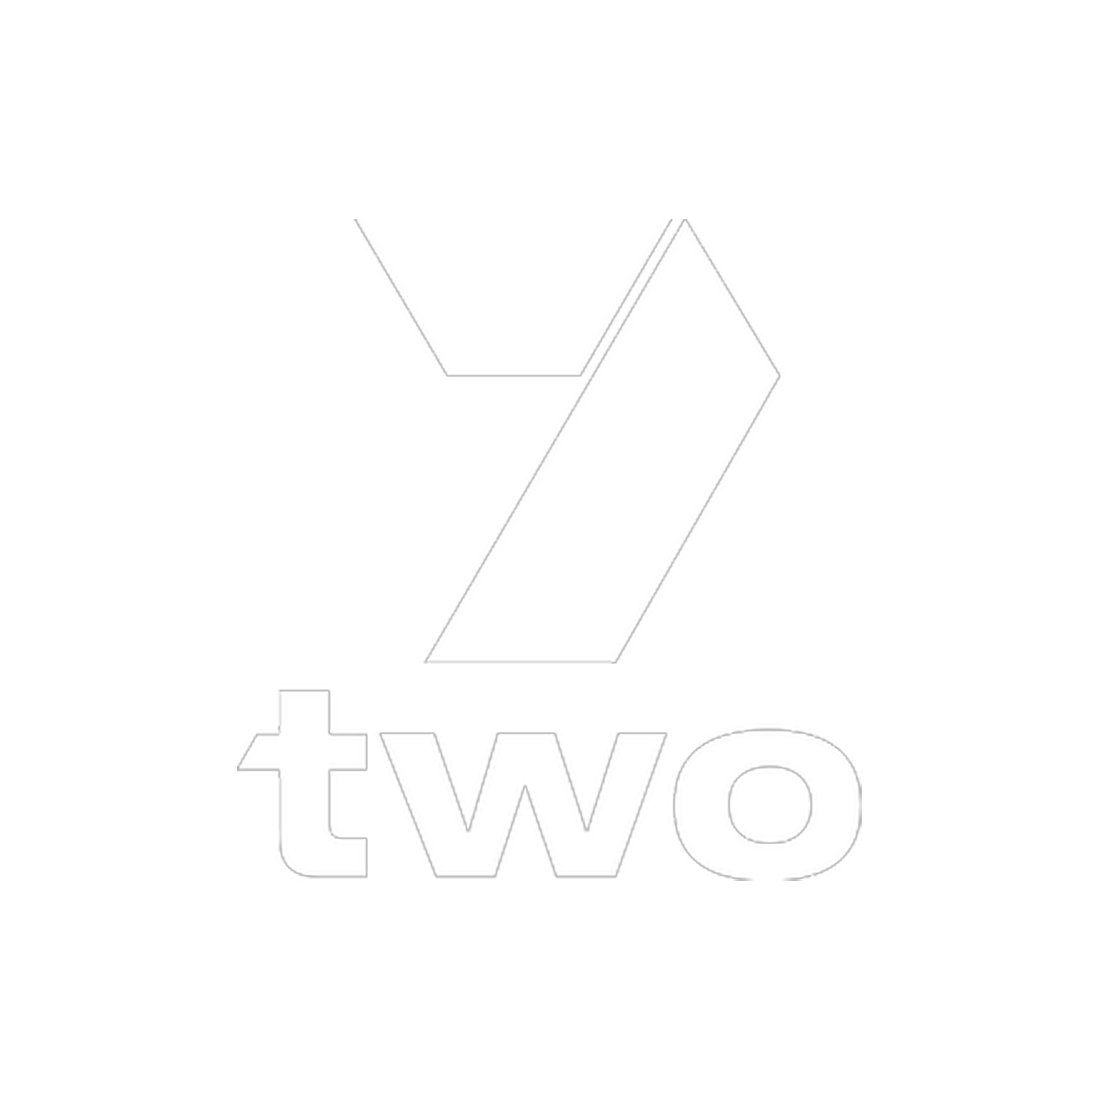 7two white logo.png